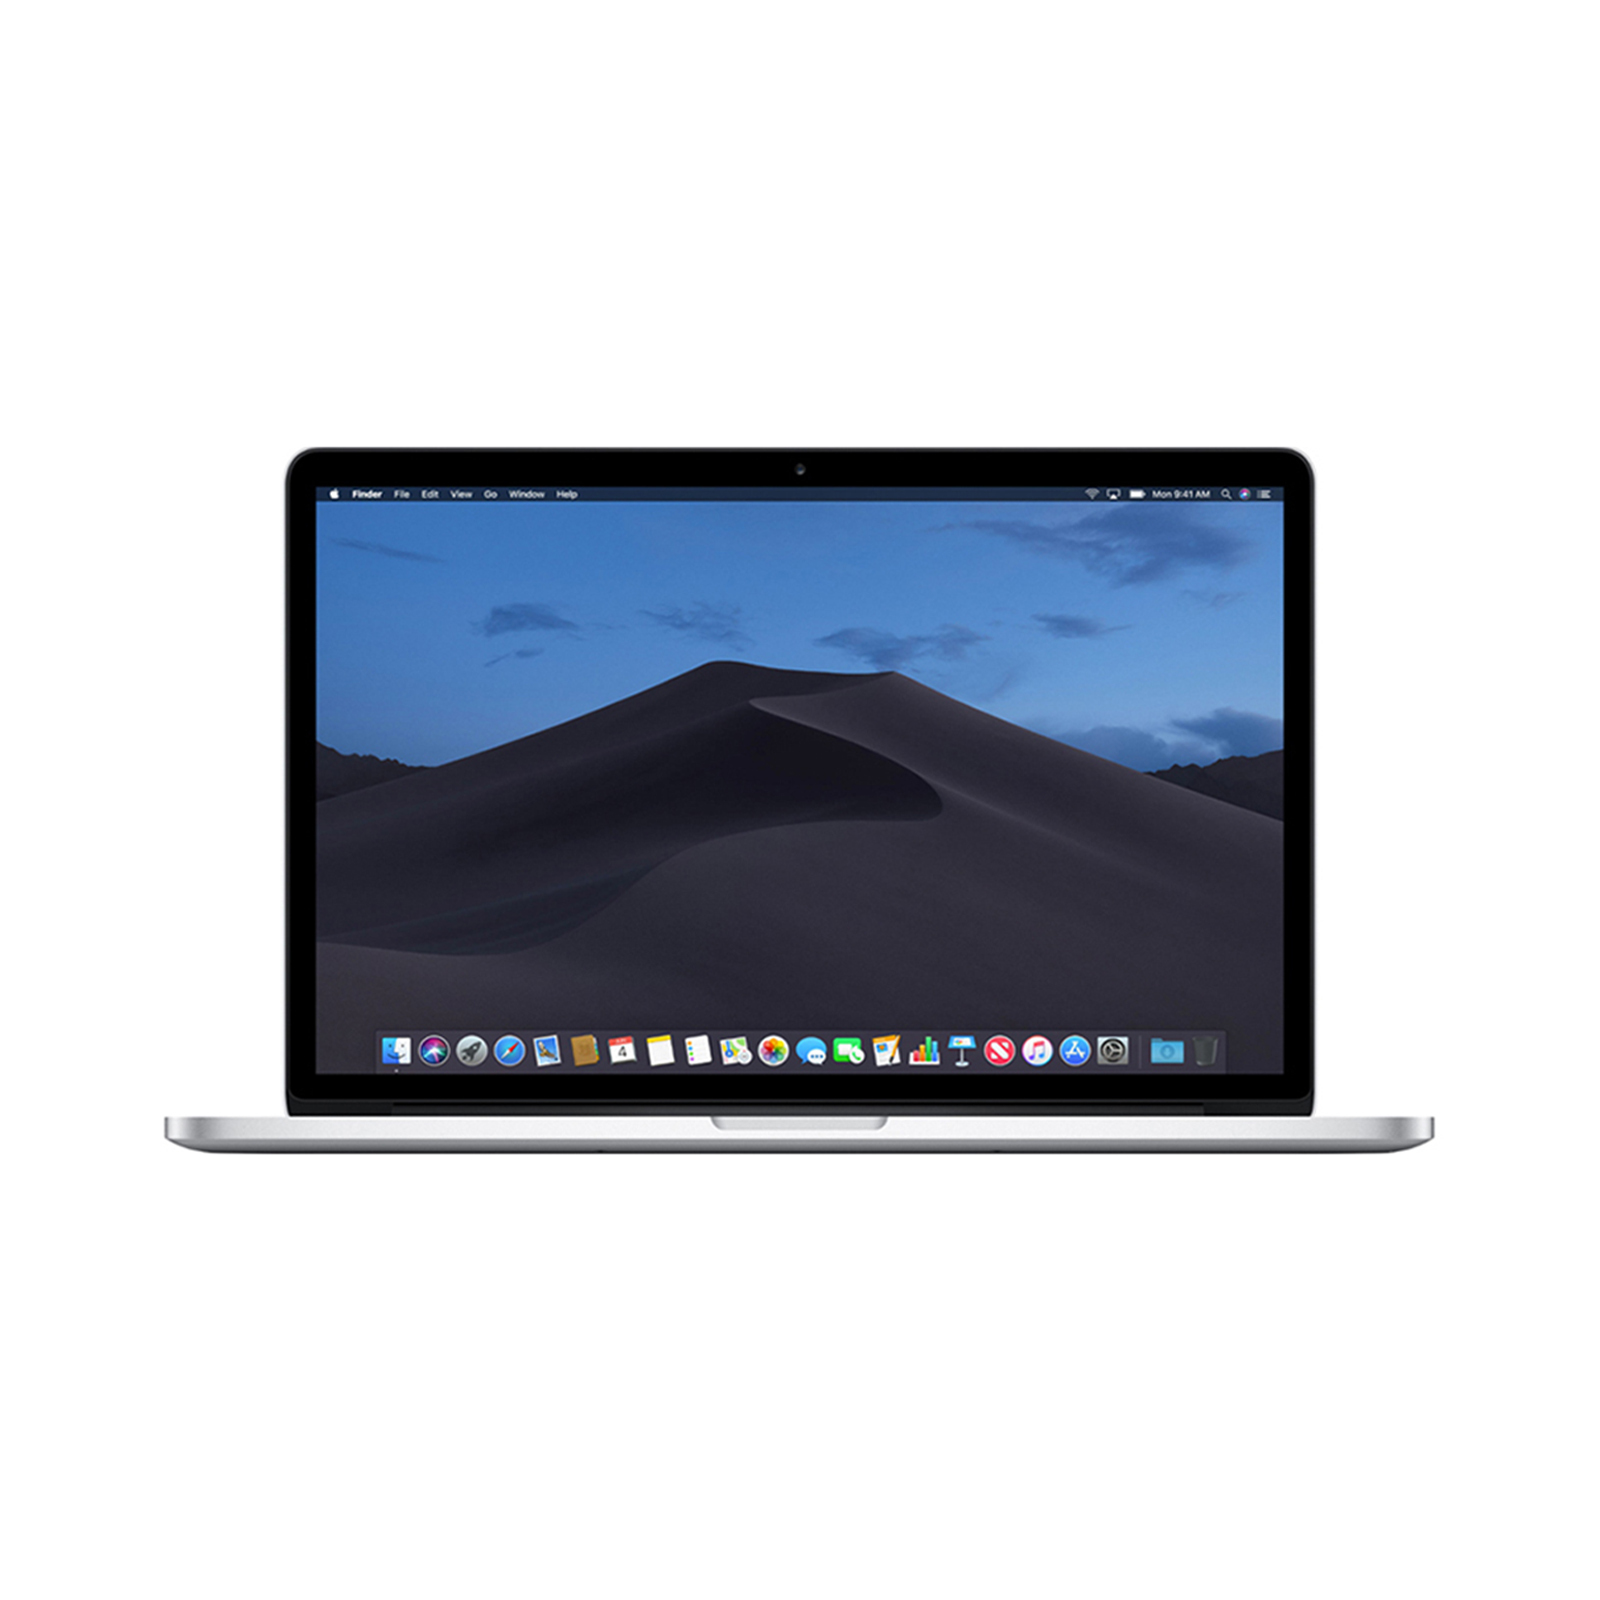 MacBook Pro (Retina, 13-inch, Early 2015) Intel Core i5 2.7 GHz 16GB 256GB SSD